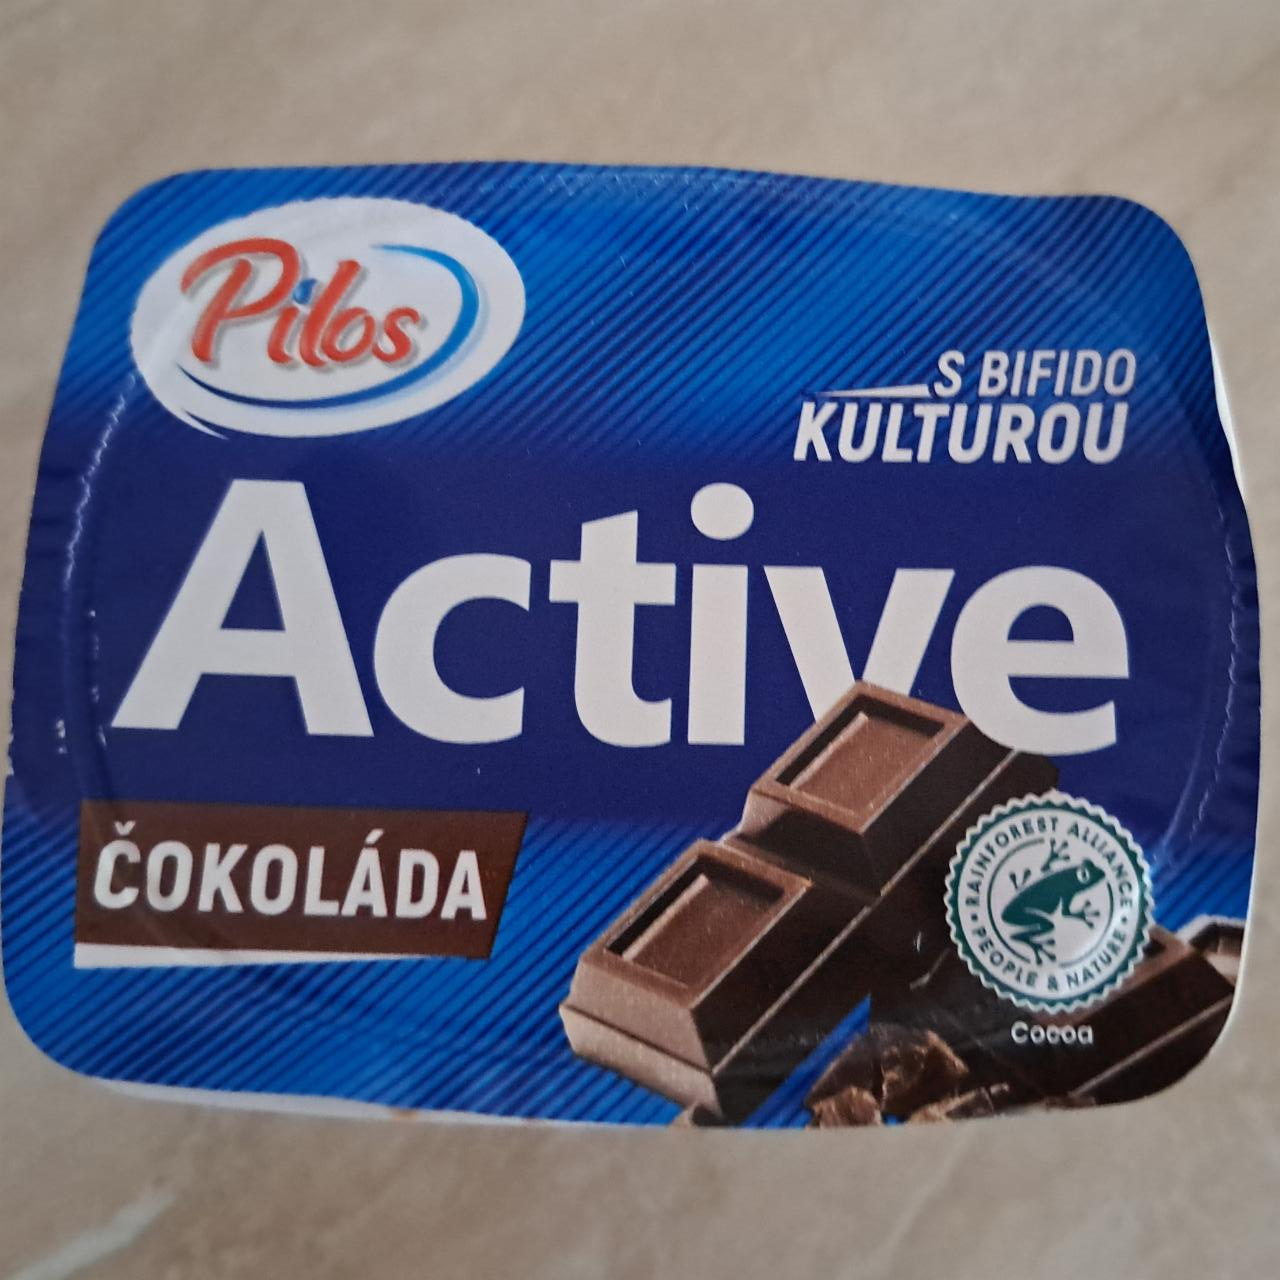 Fotografie - Active čokoláda s bifido kulturou Pilos